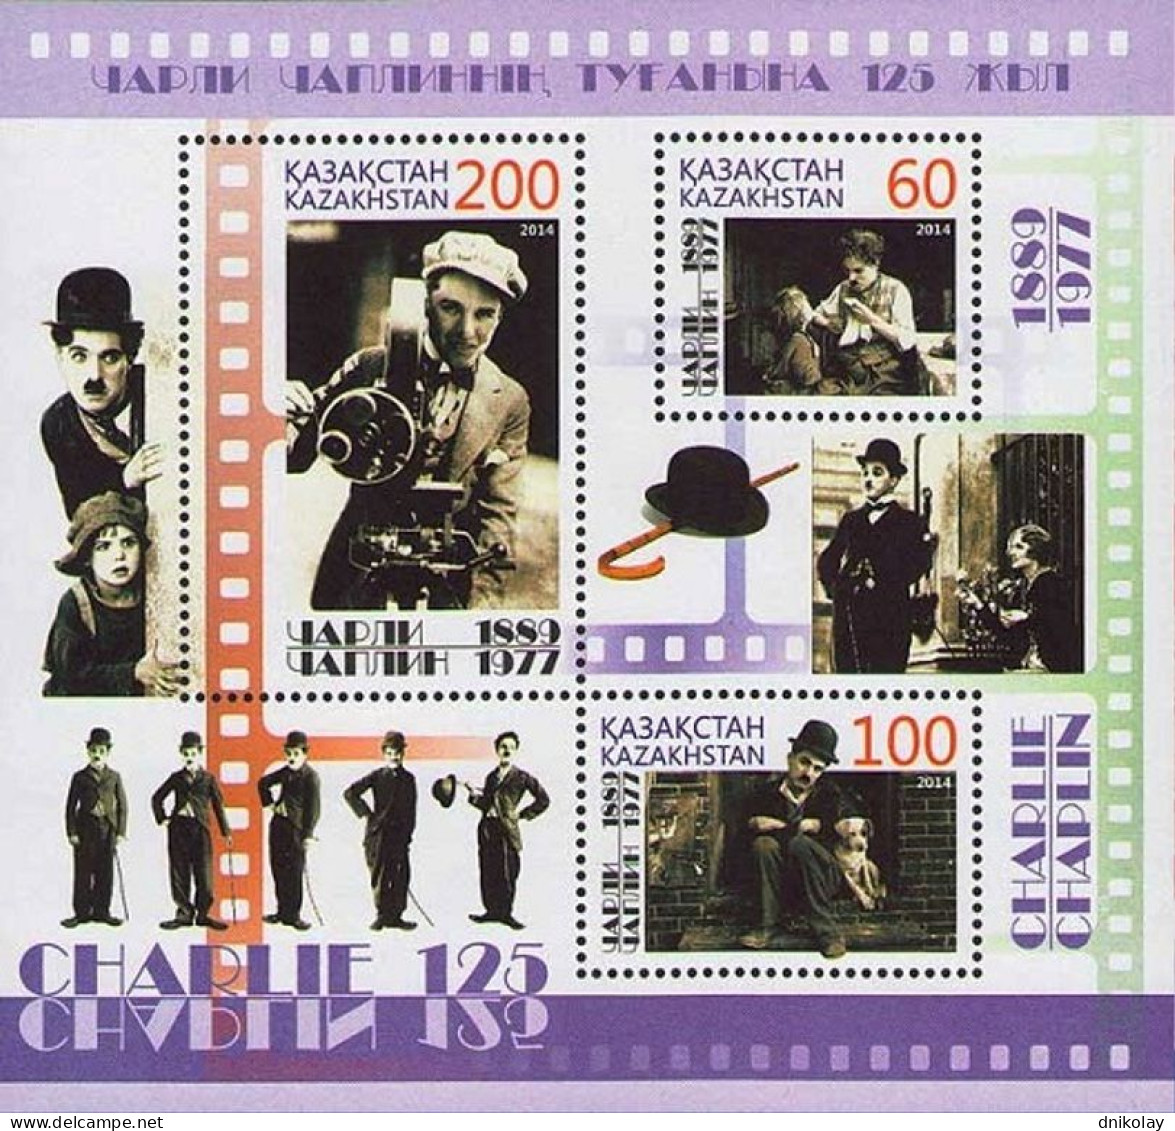 2015 887 Kazakhstan The 125th Anniversary (2014) Of The Birth Of Charlie Chaplin, 1889-1977 MNH - Kazakhstan